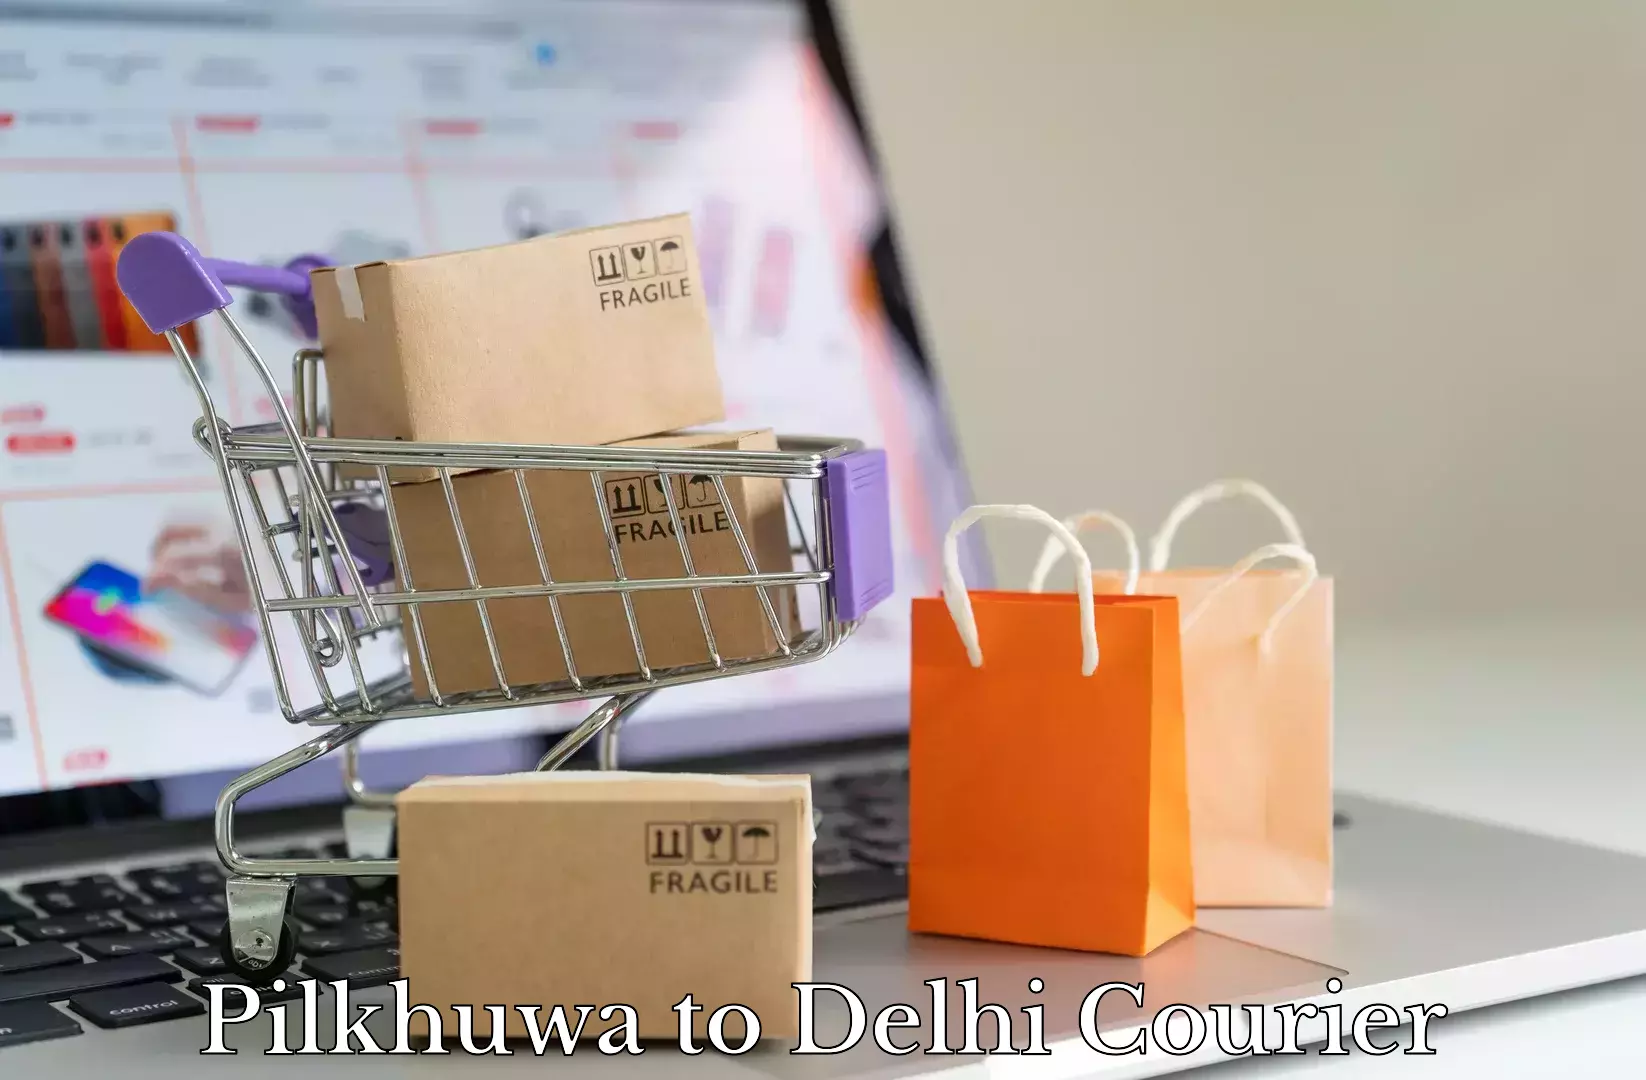 Professional furniture movers Pilkhuwa to Delhi